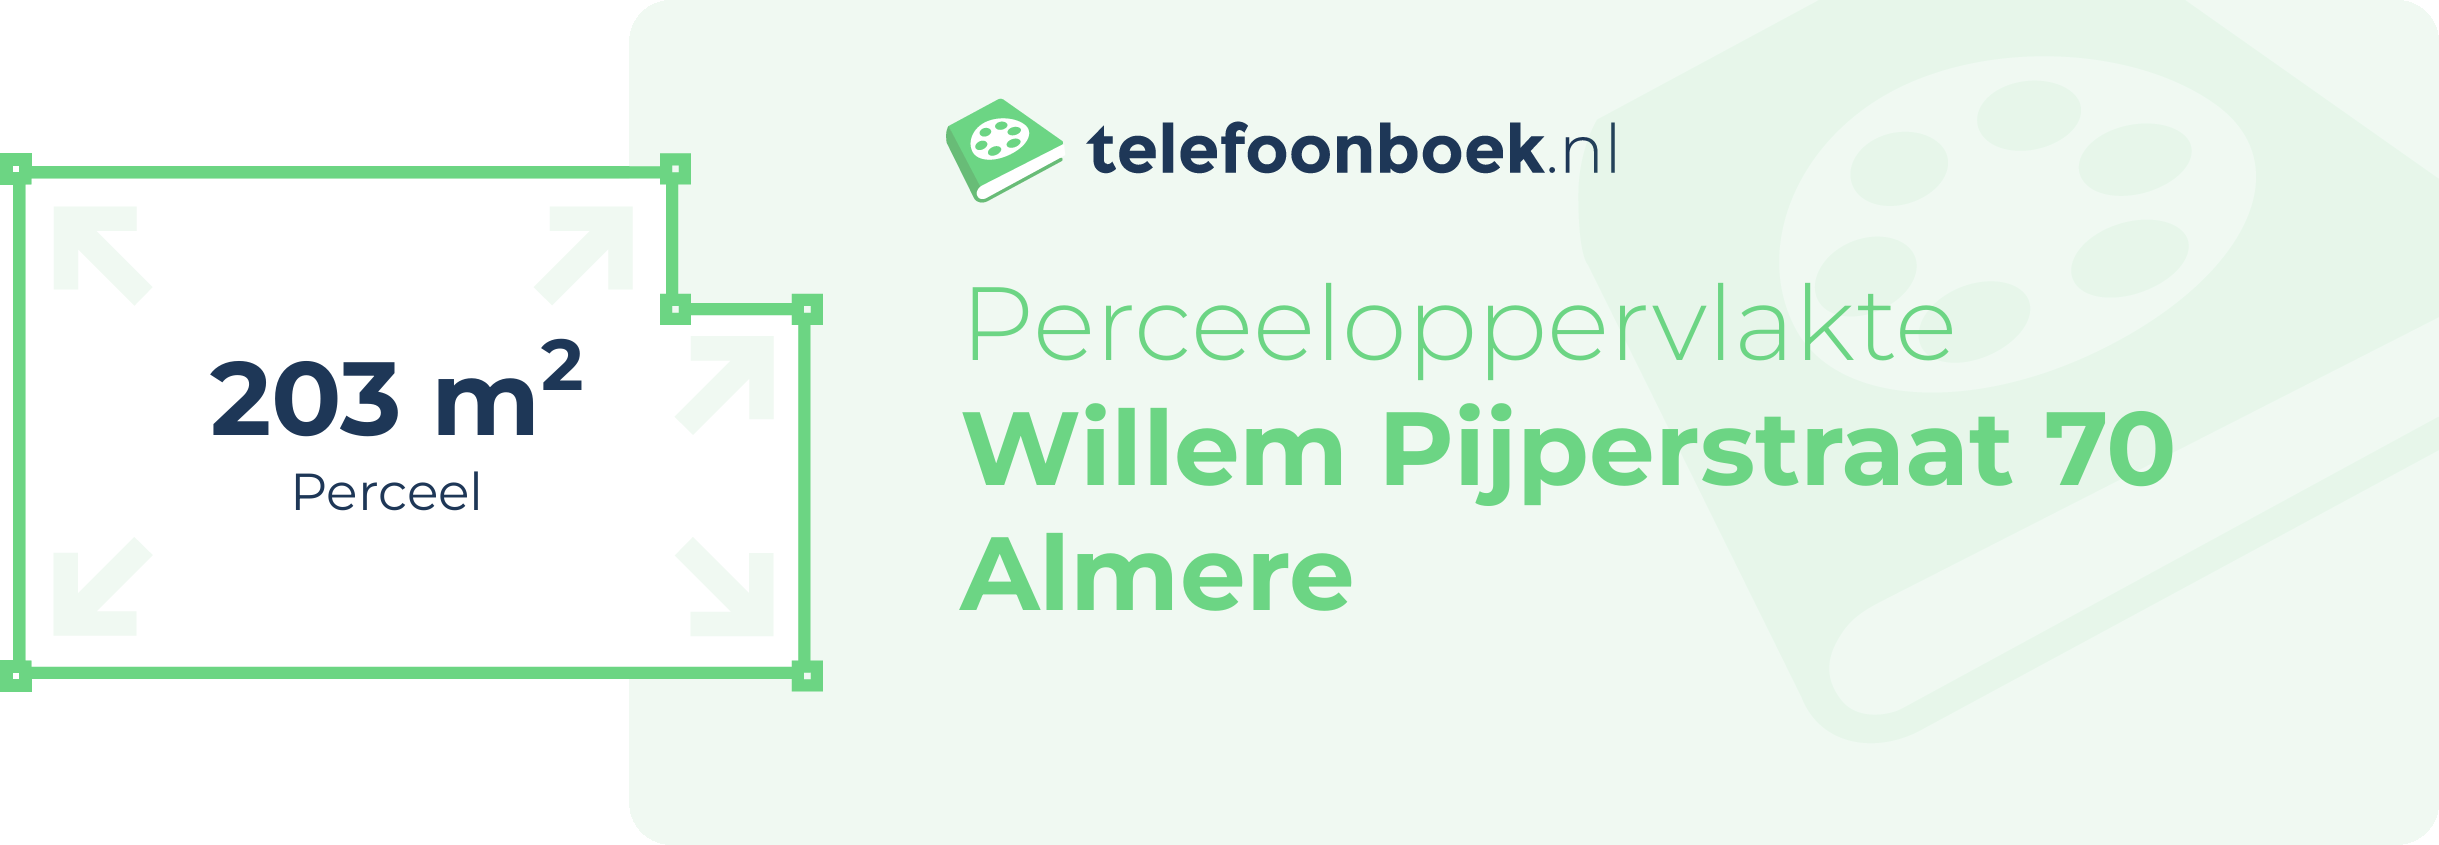 Perceeloppervlakte Willem Pijperstraat 70 Almere